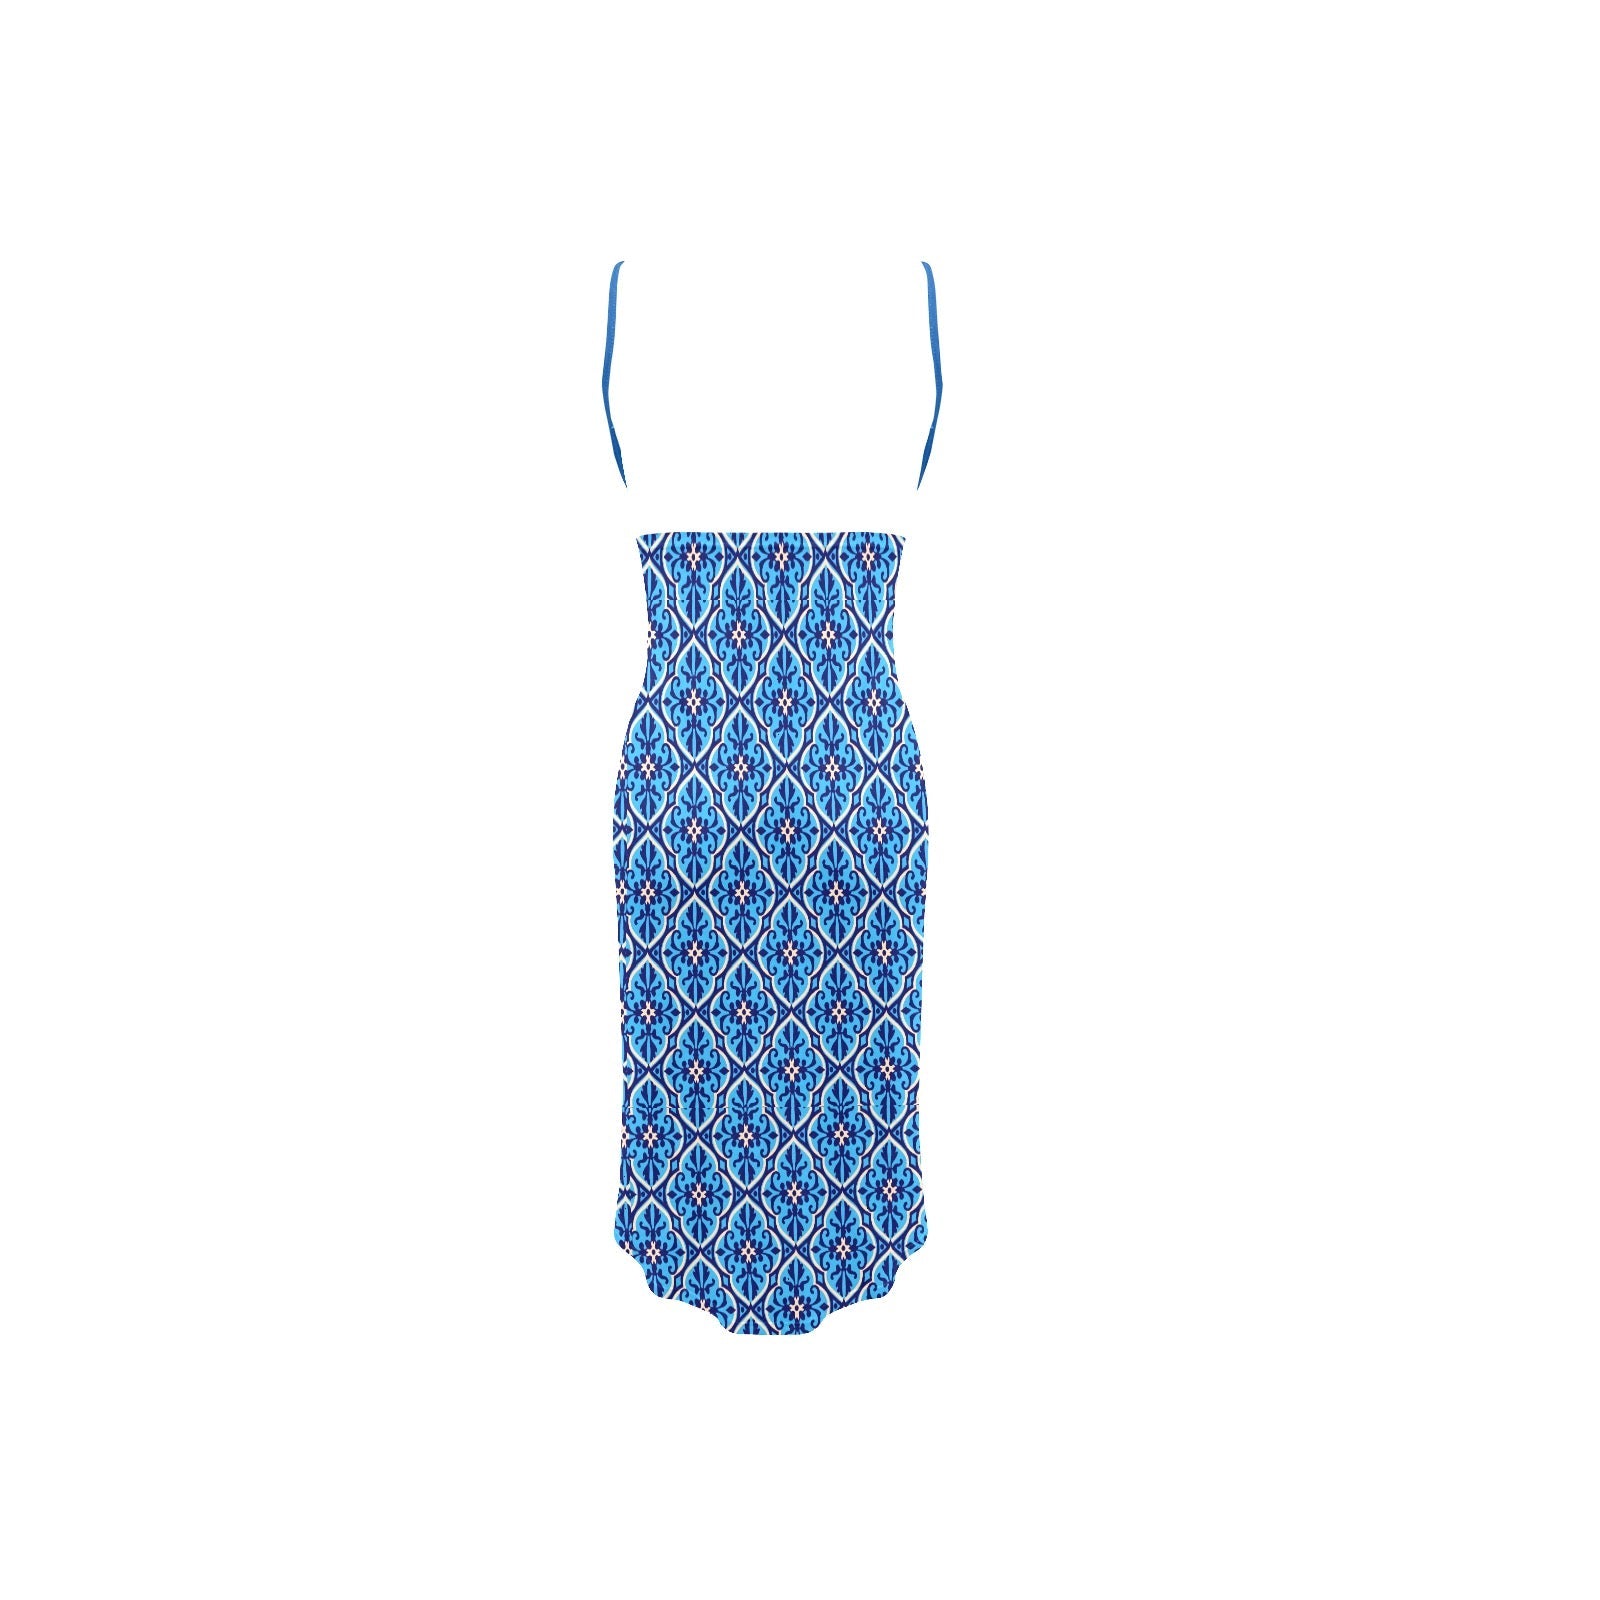 Blue Geometric Spaghetti Strap Backless Beach Dress - Shell Yeah by JaksWhite1S370CEFC2F6B5466C99DEFE0DFCC4FC7C